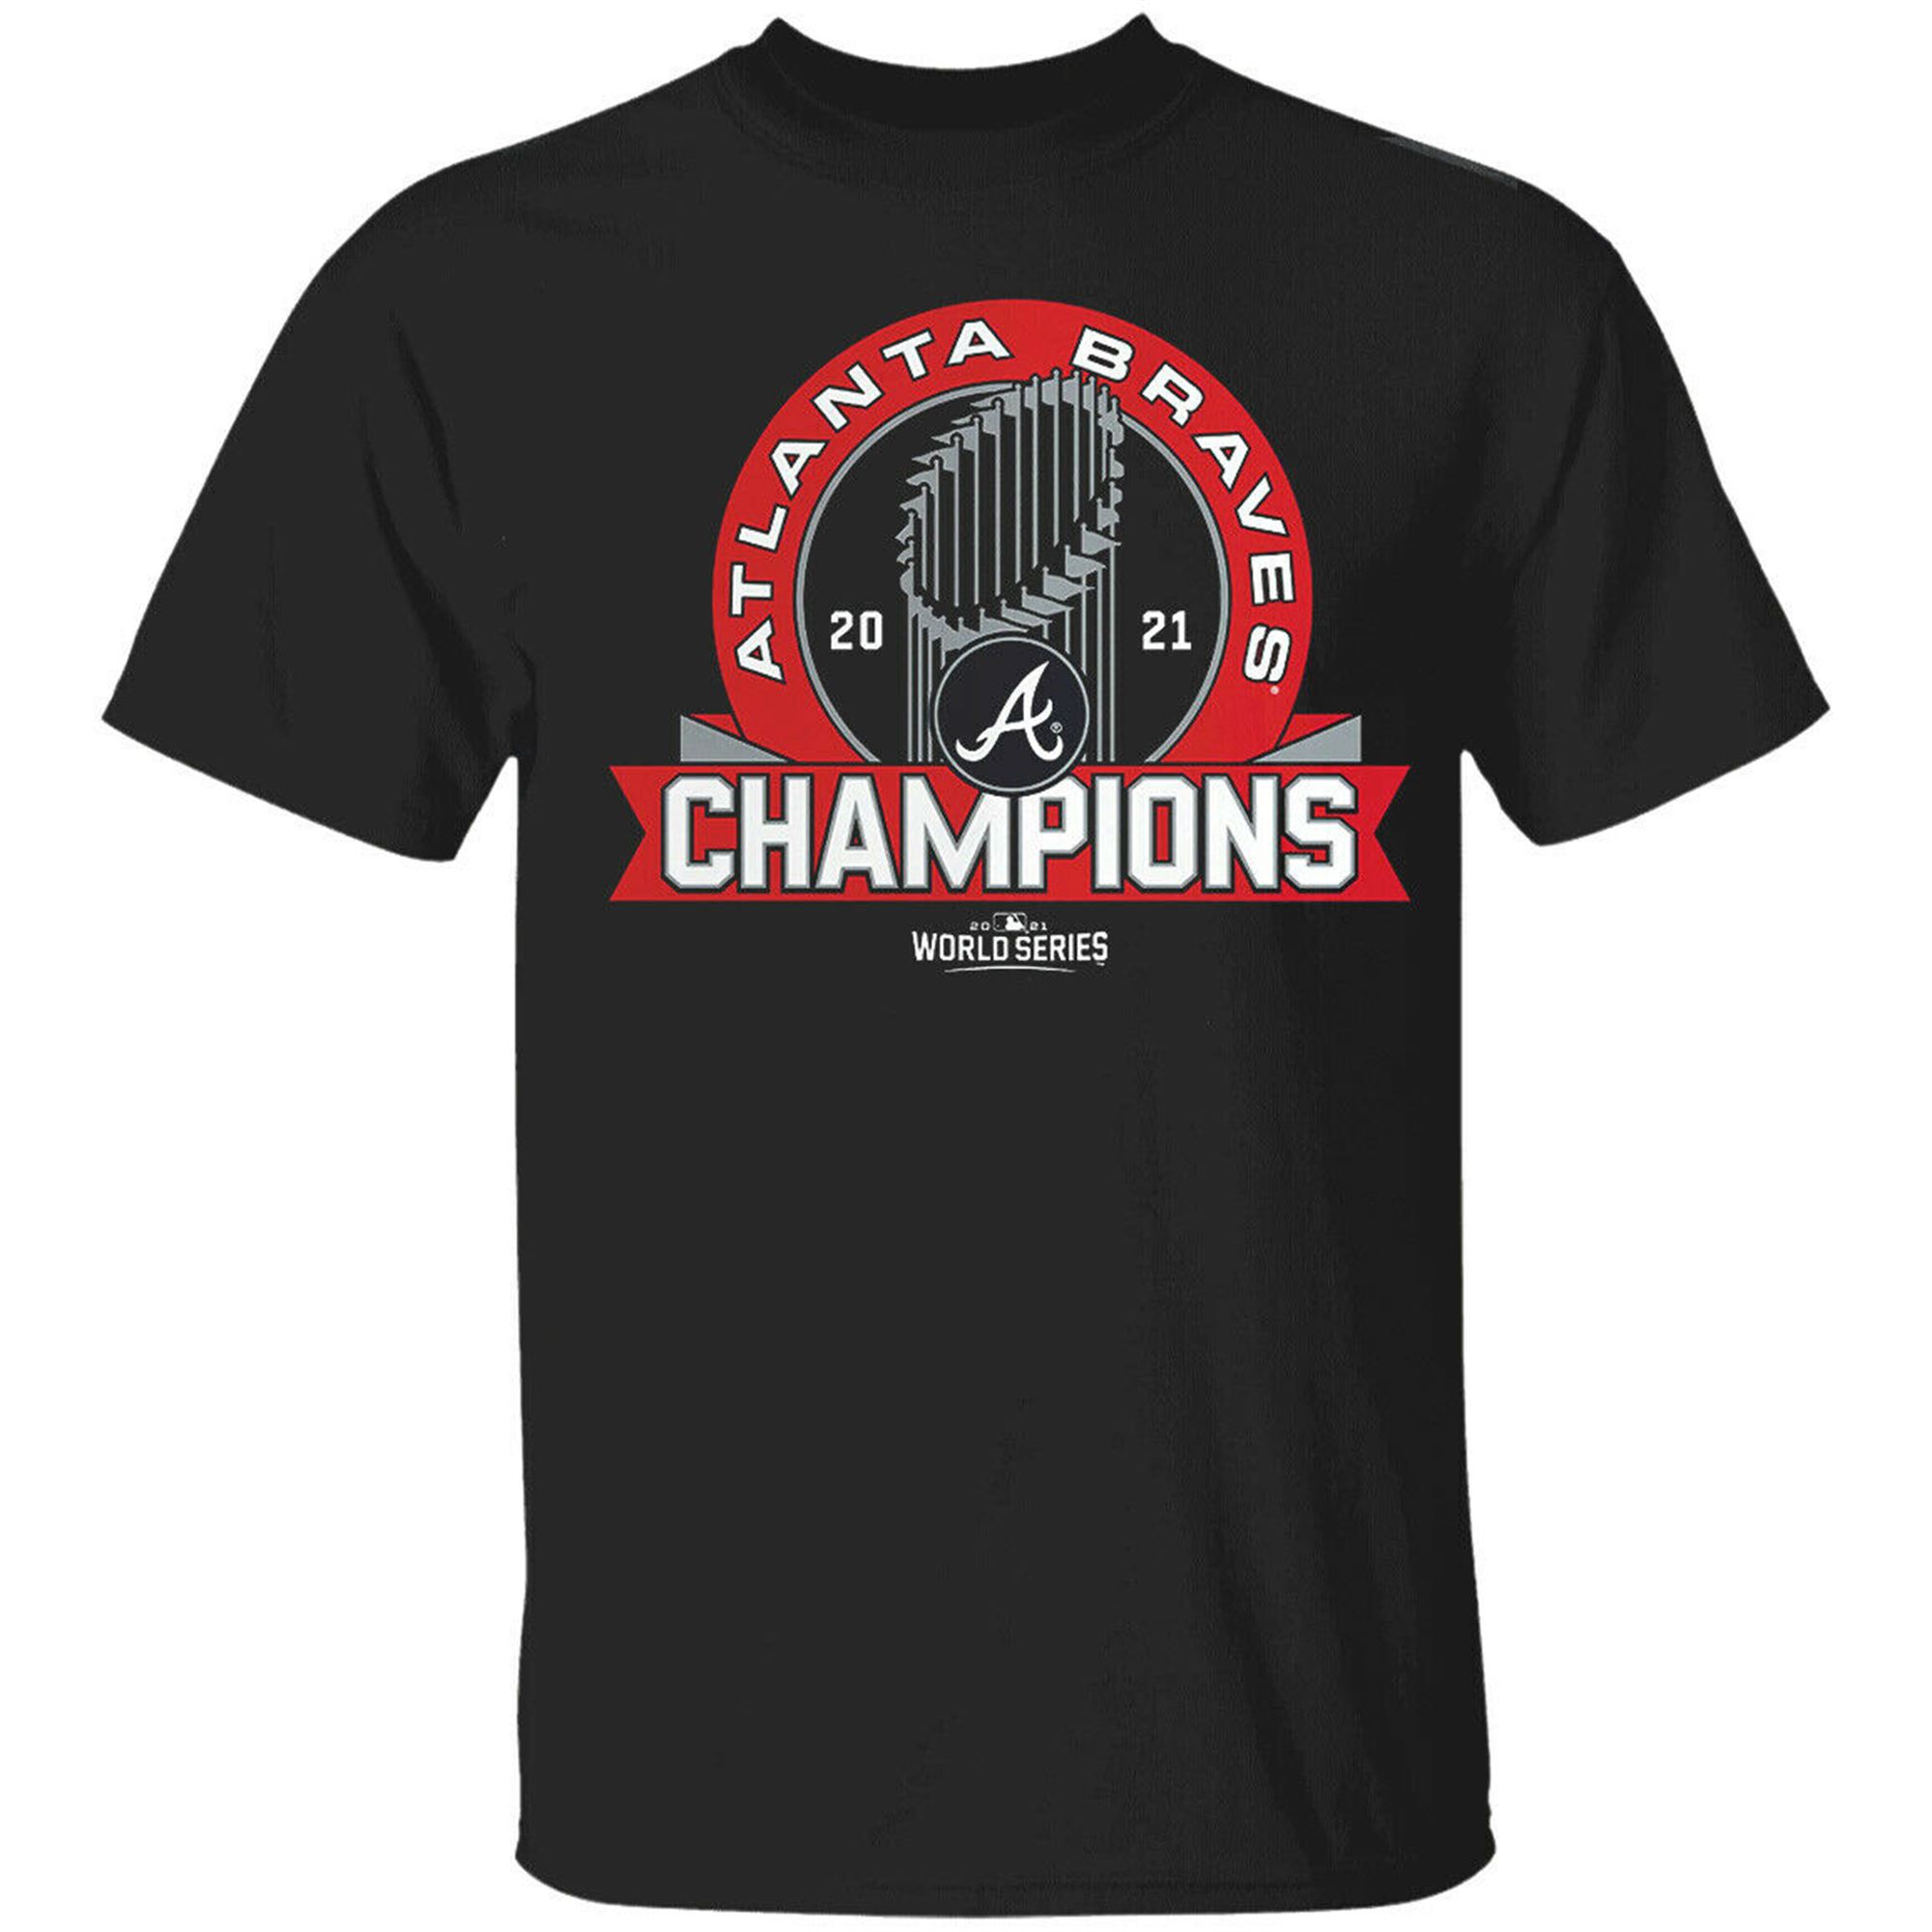 Atlanta Braves 2021 World Series Champions T-shirt Size S-5xl Full Size Up To 5xl